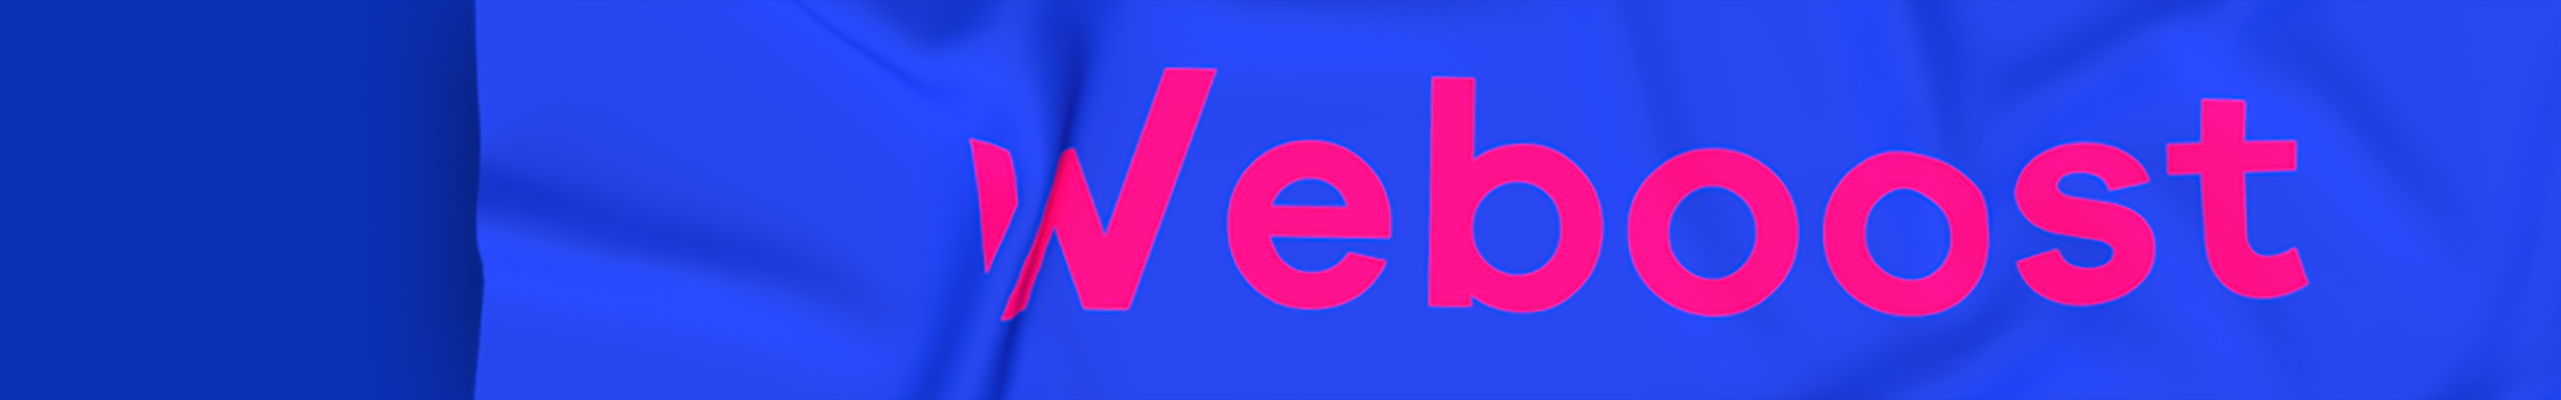 Weboost Agência Marketing Digital's profile banner